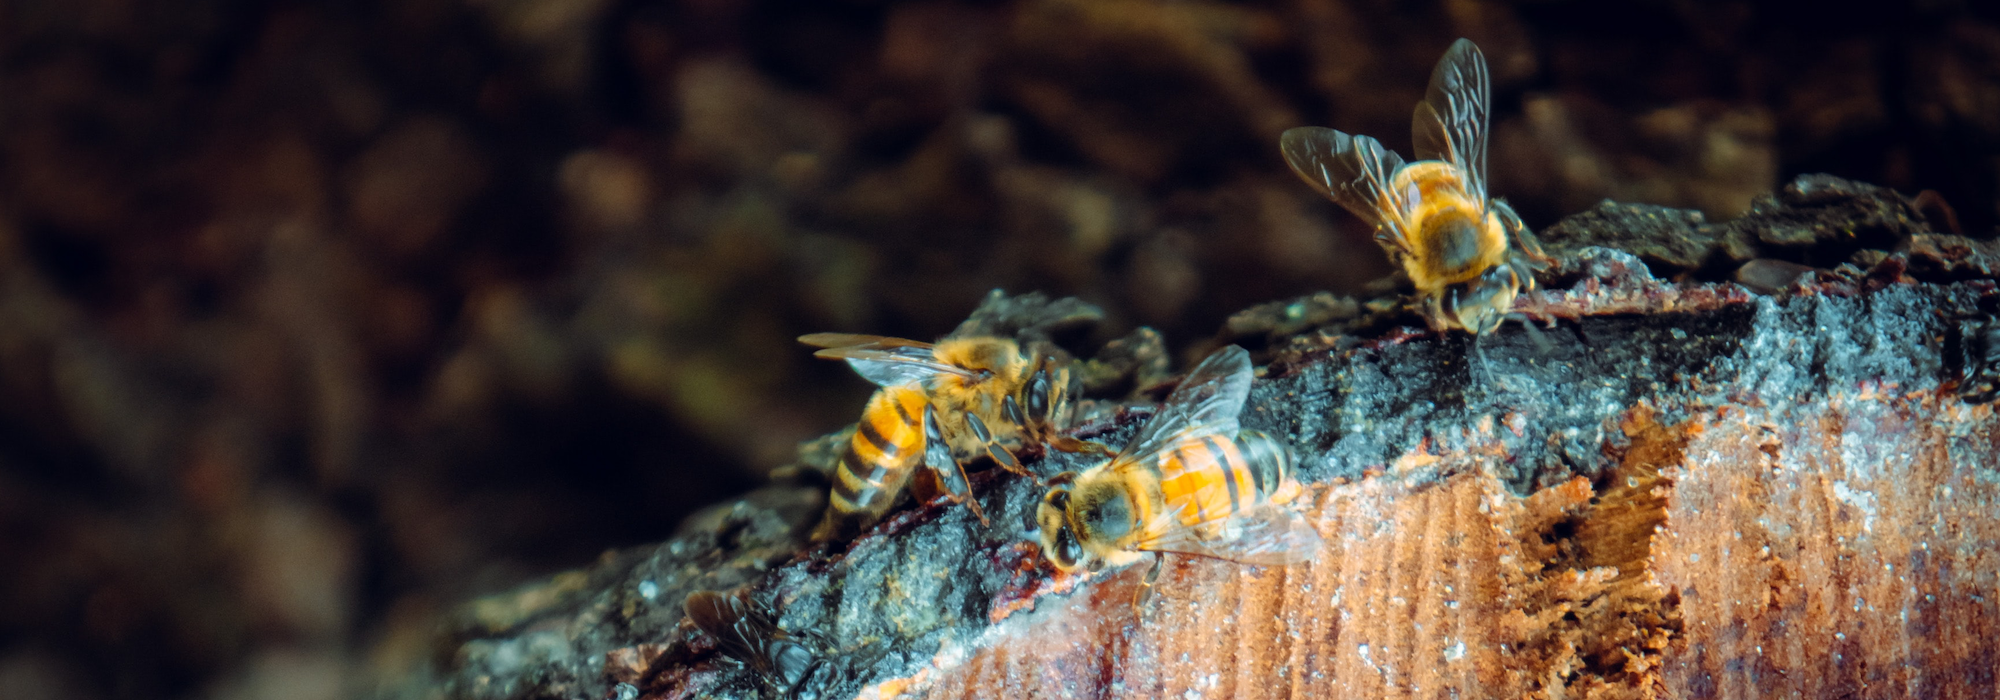 honeybees on wood